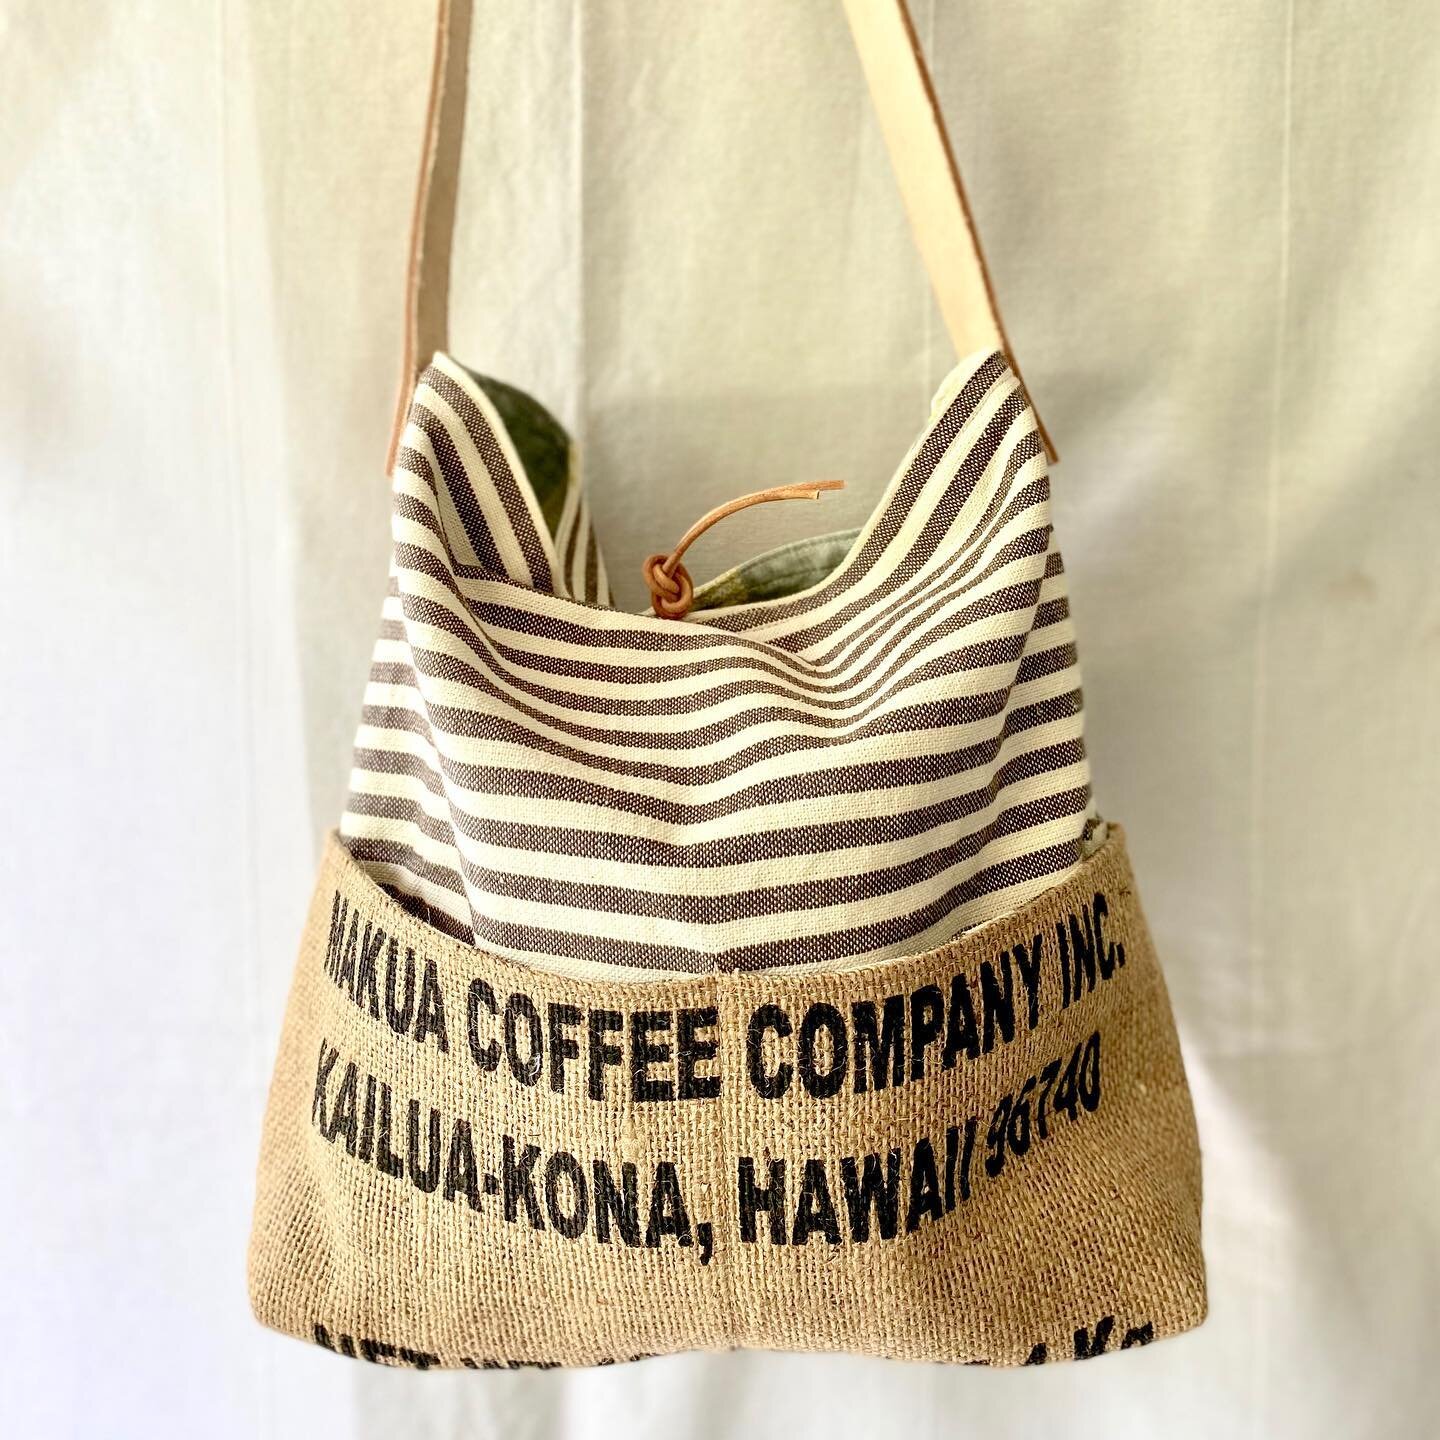 One of my new five pocket linen shoulder bags.  Www.KonaCoffeeTotes.com.  #totebags #konahawaii #handmade #madewithaloha #bigisland #coffeefarmer #linen #madeinhawaii